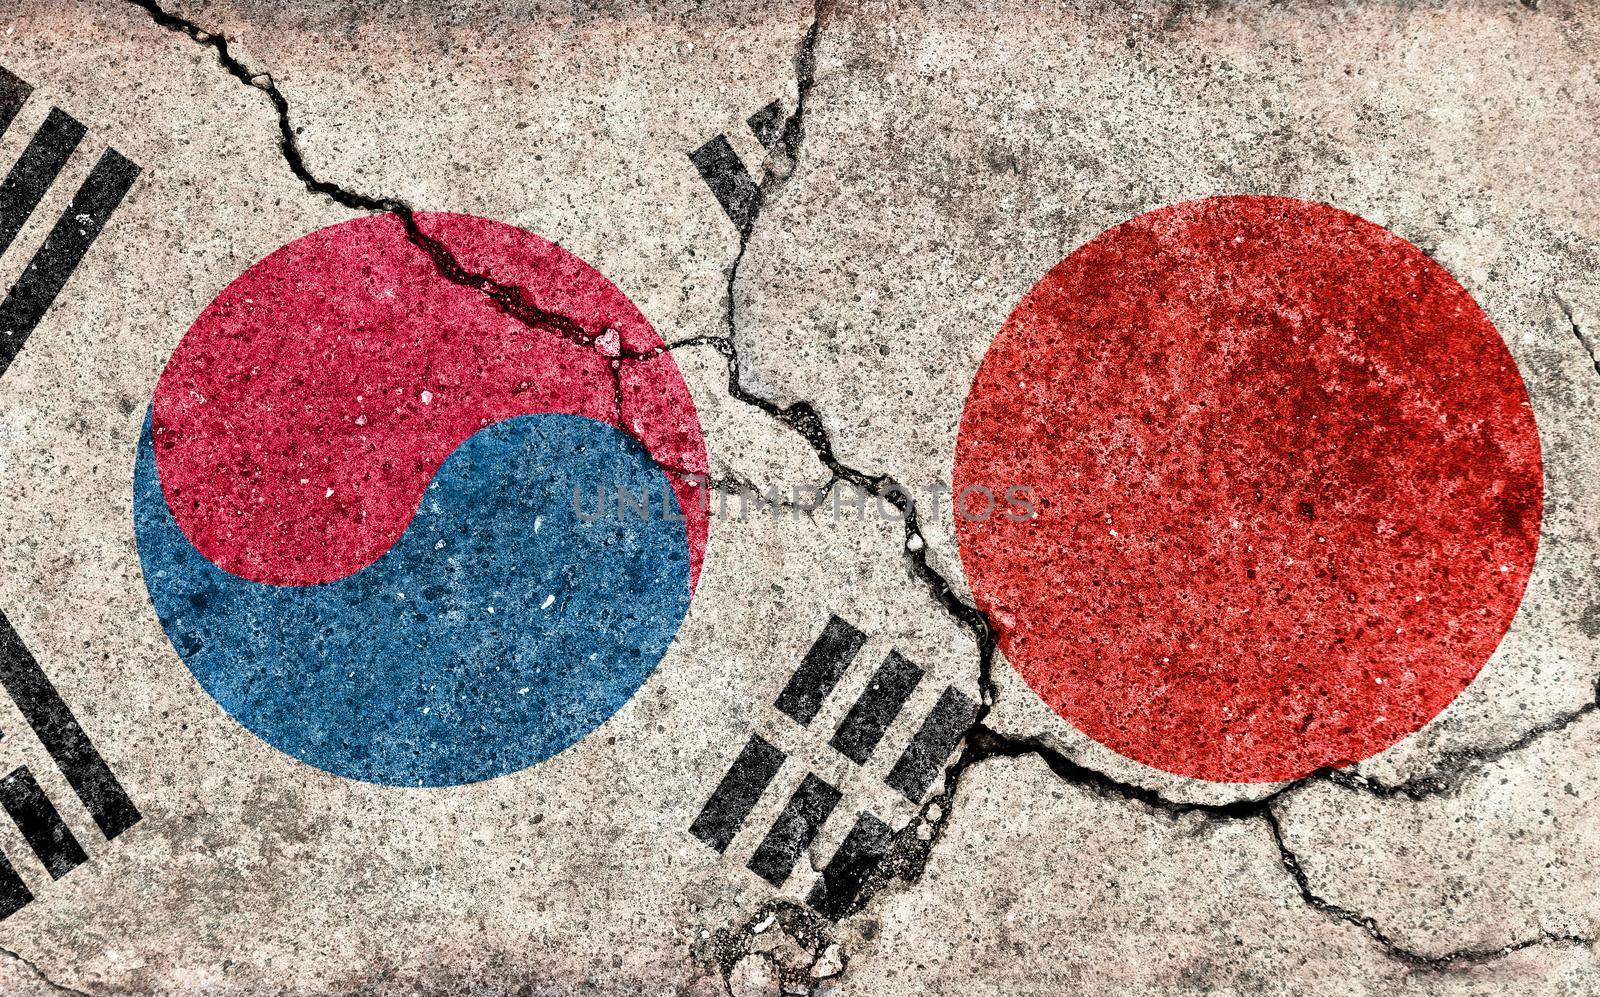 Grunge country flag illustration (cracked concrete background) / Japan vs South korea (Political or economic conflict)